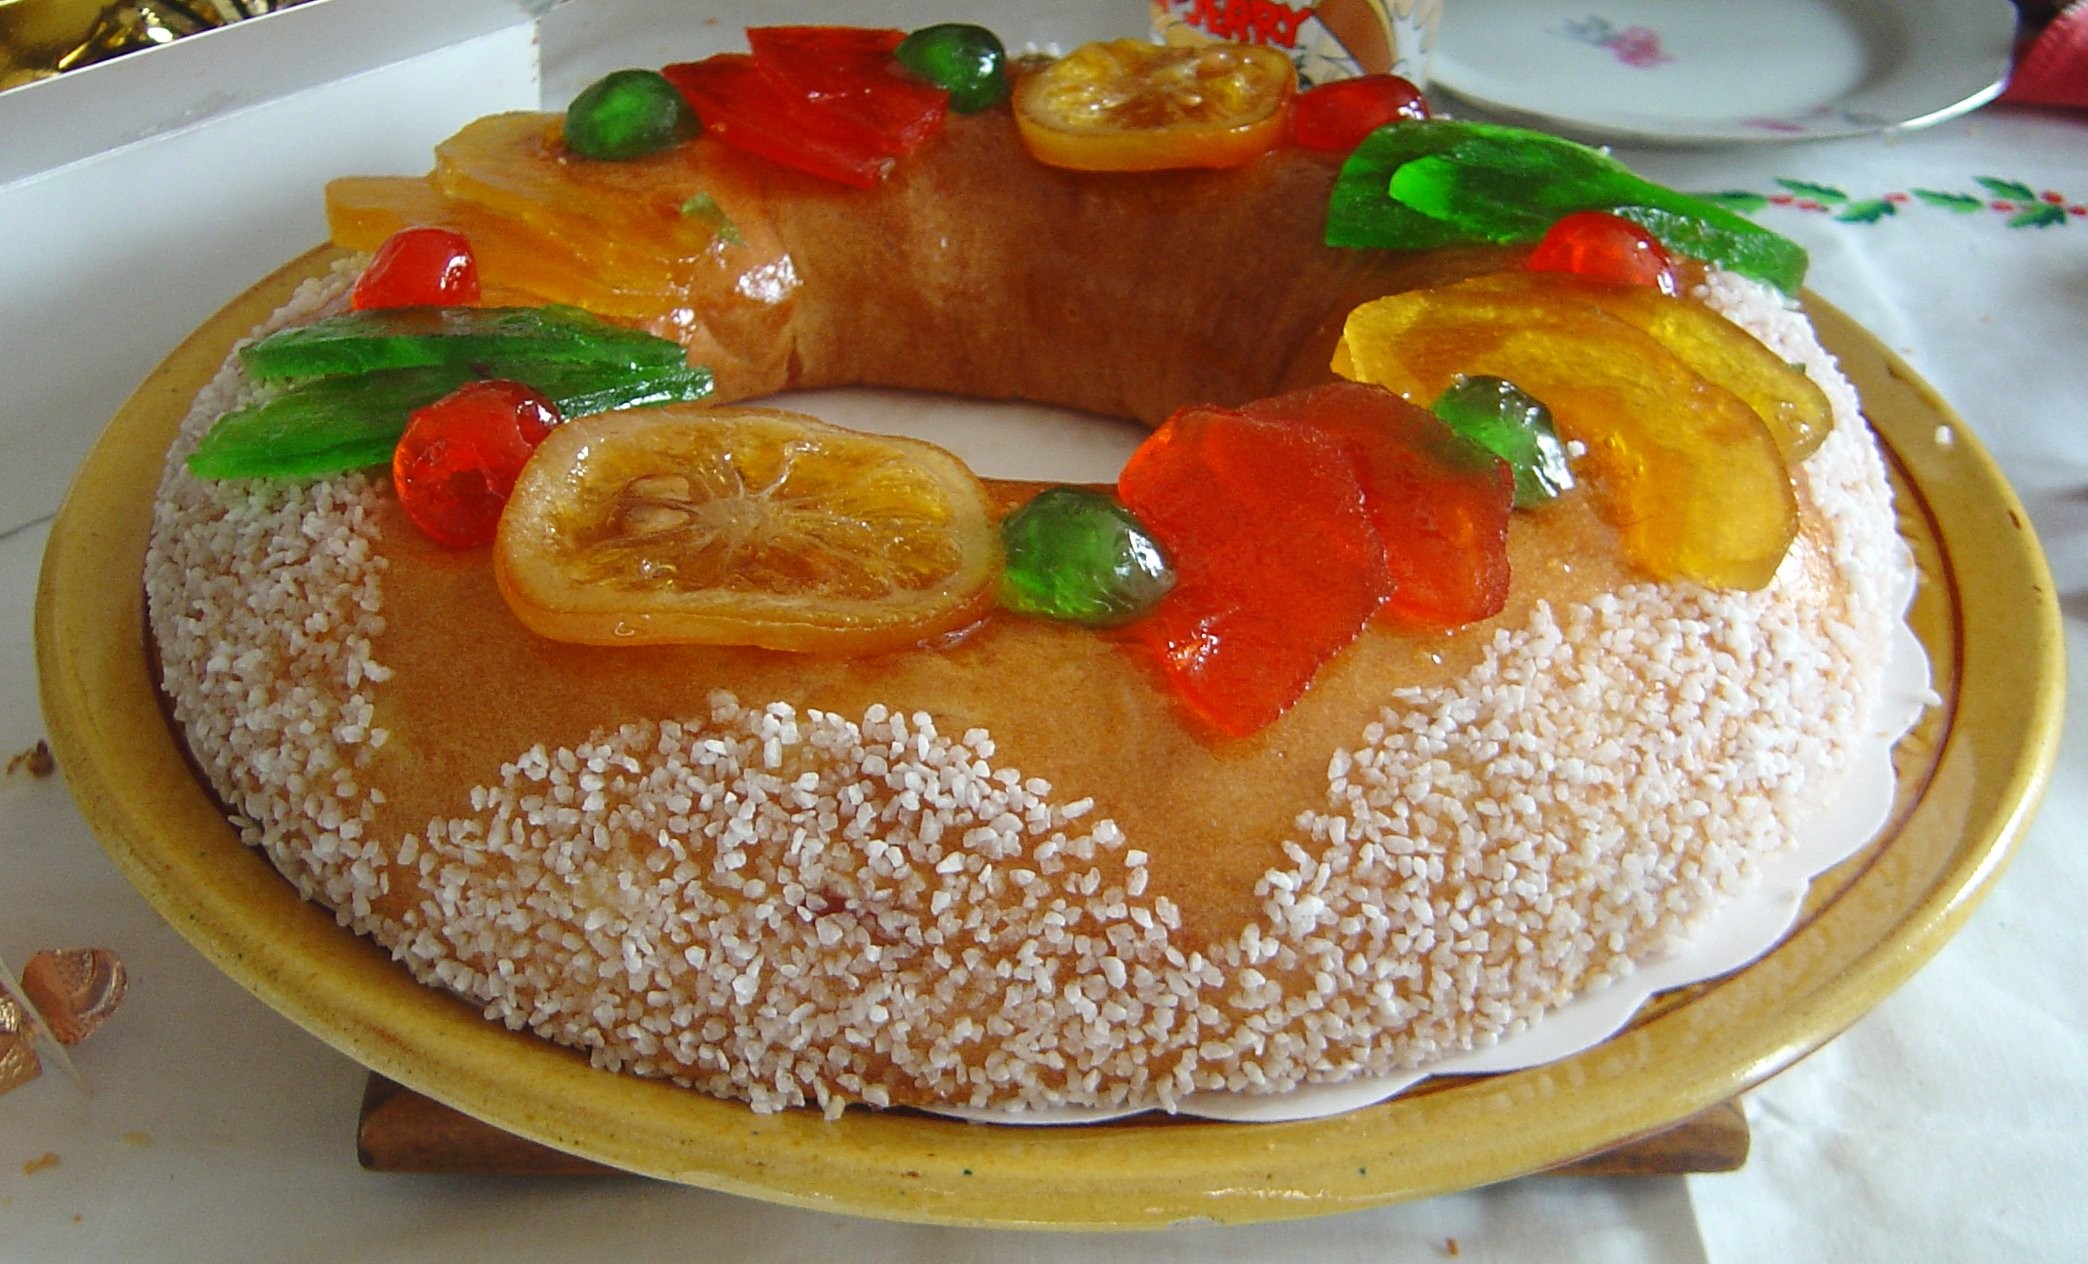 Roscon de Reyes